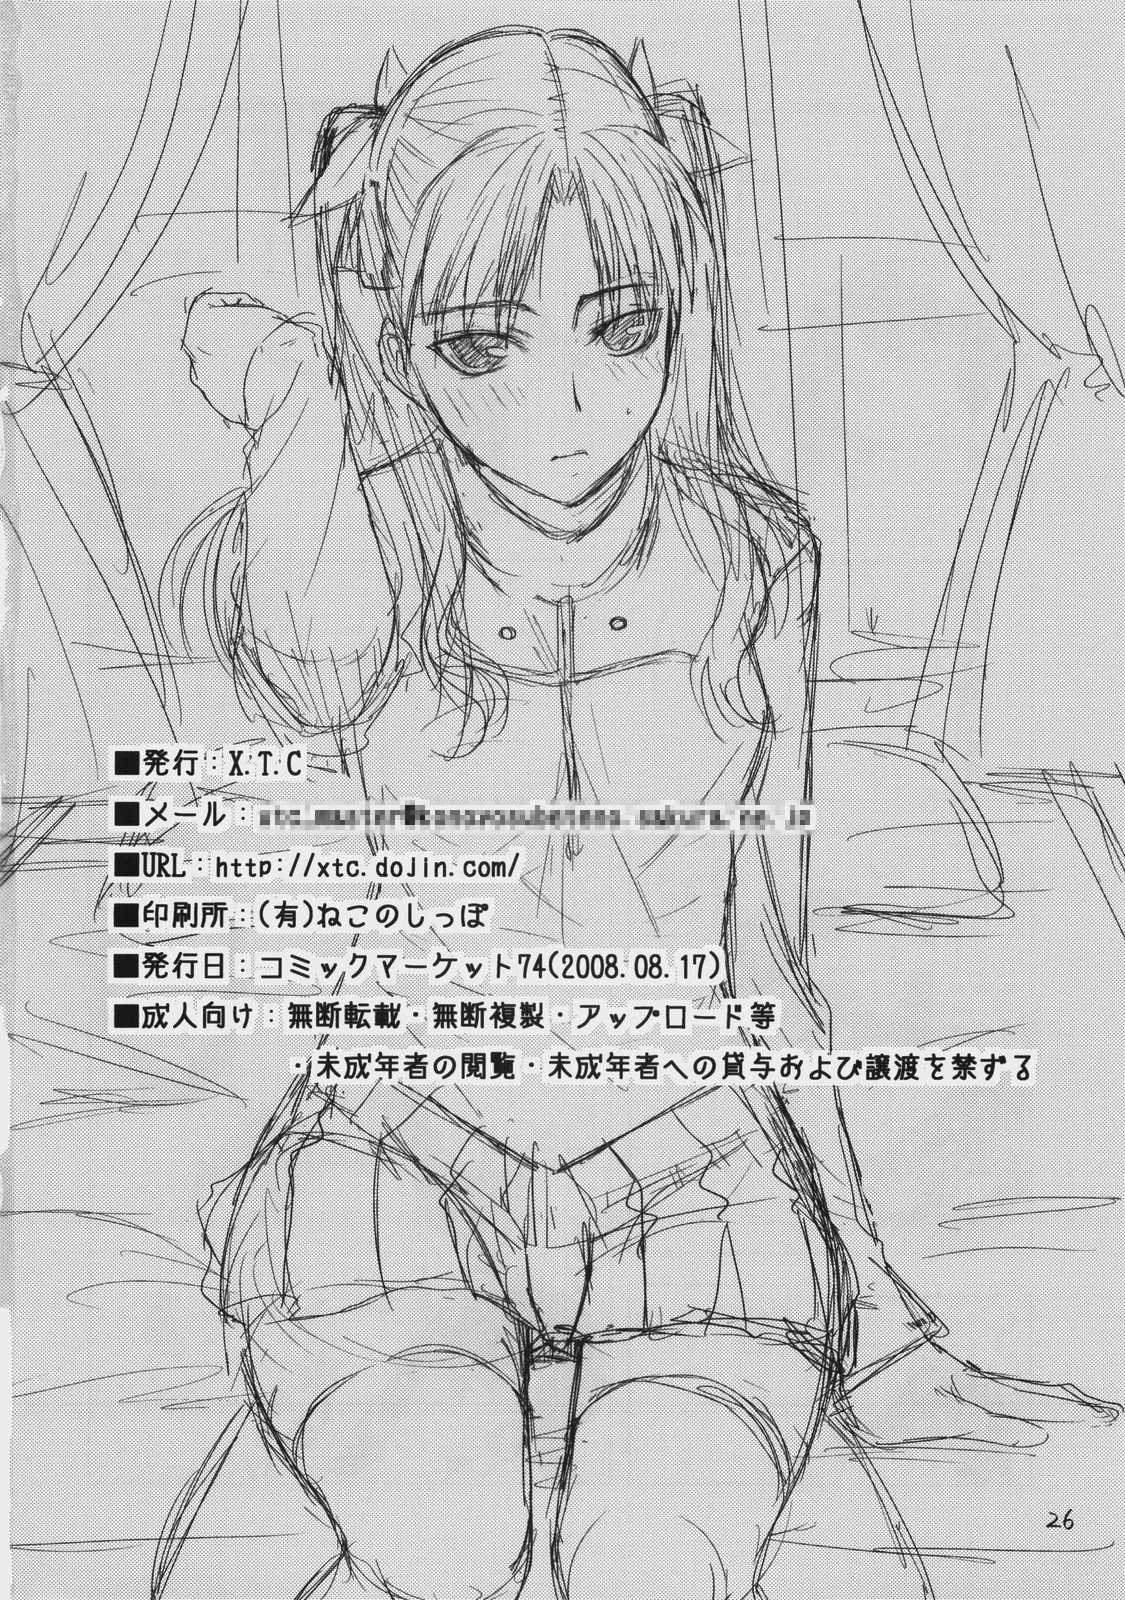 [X.T.C] Dead Lock Princess ~Tosaka Rin no Bunretsu~ (Fate) 